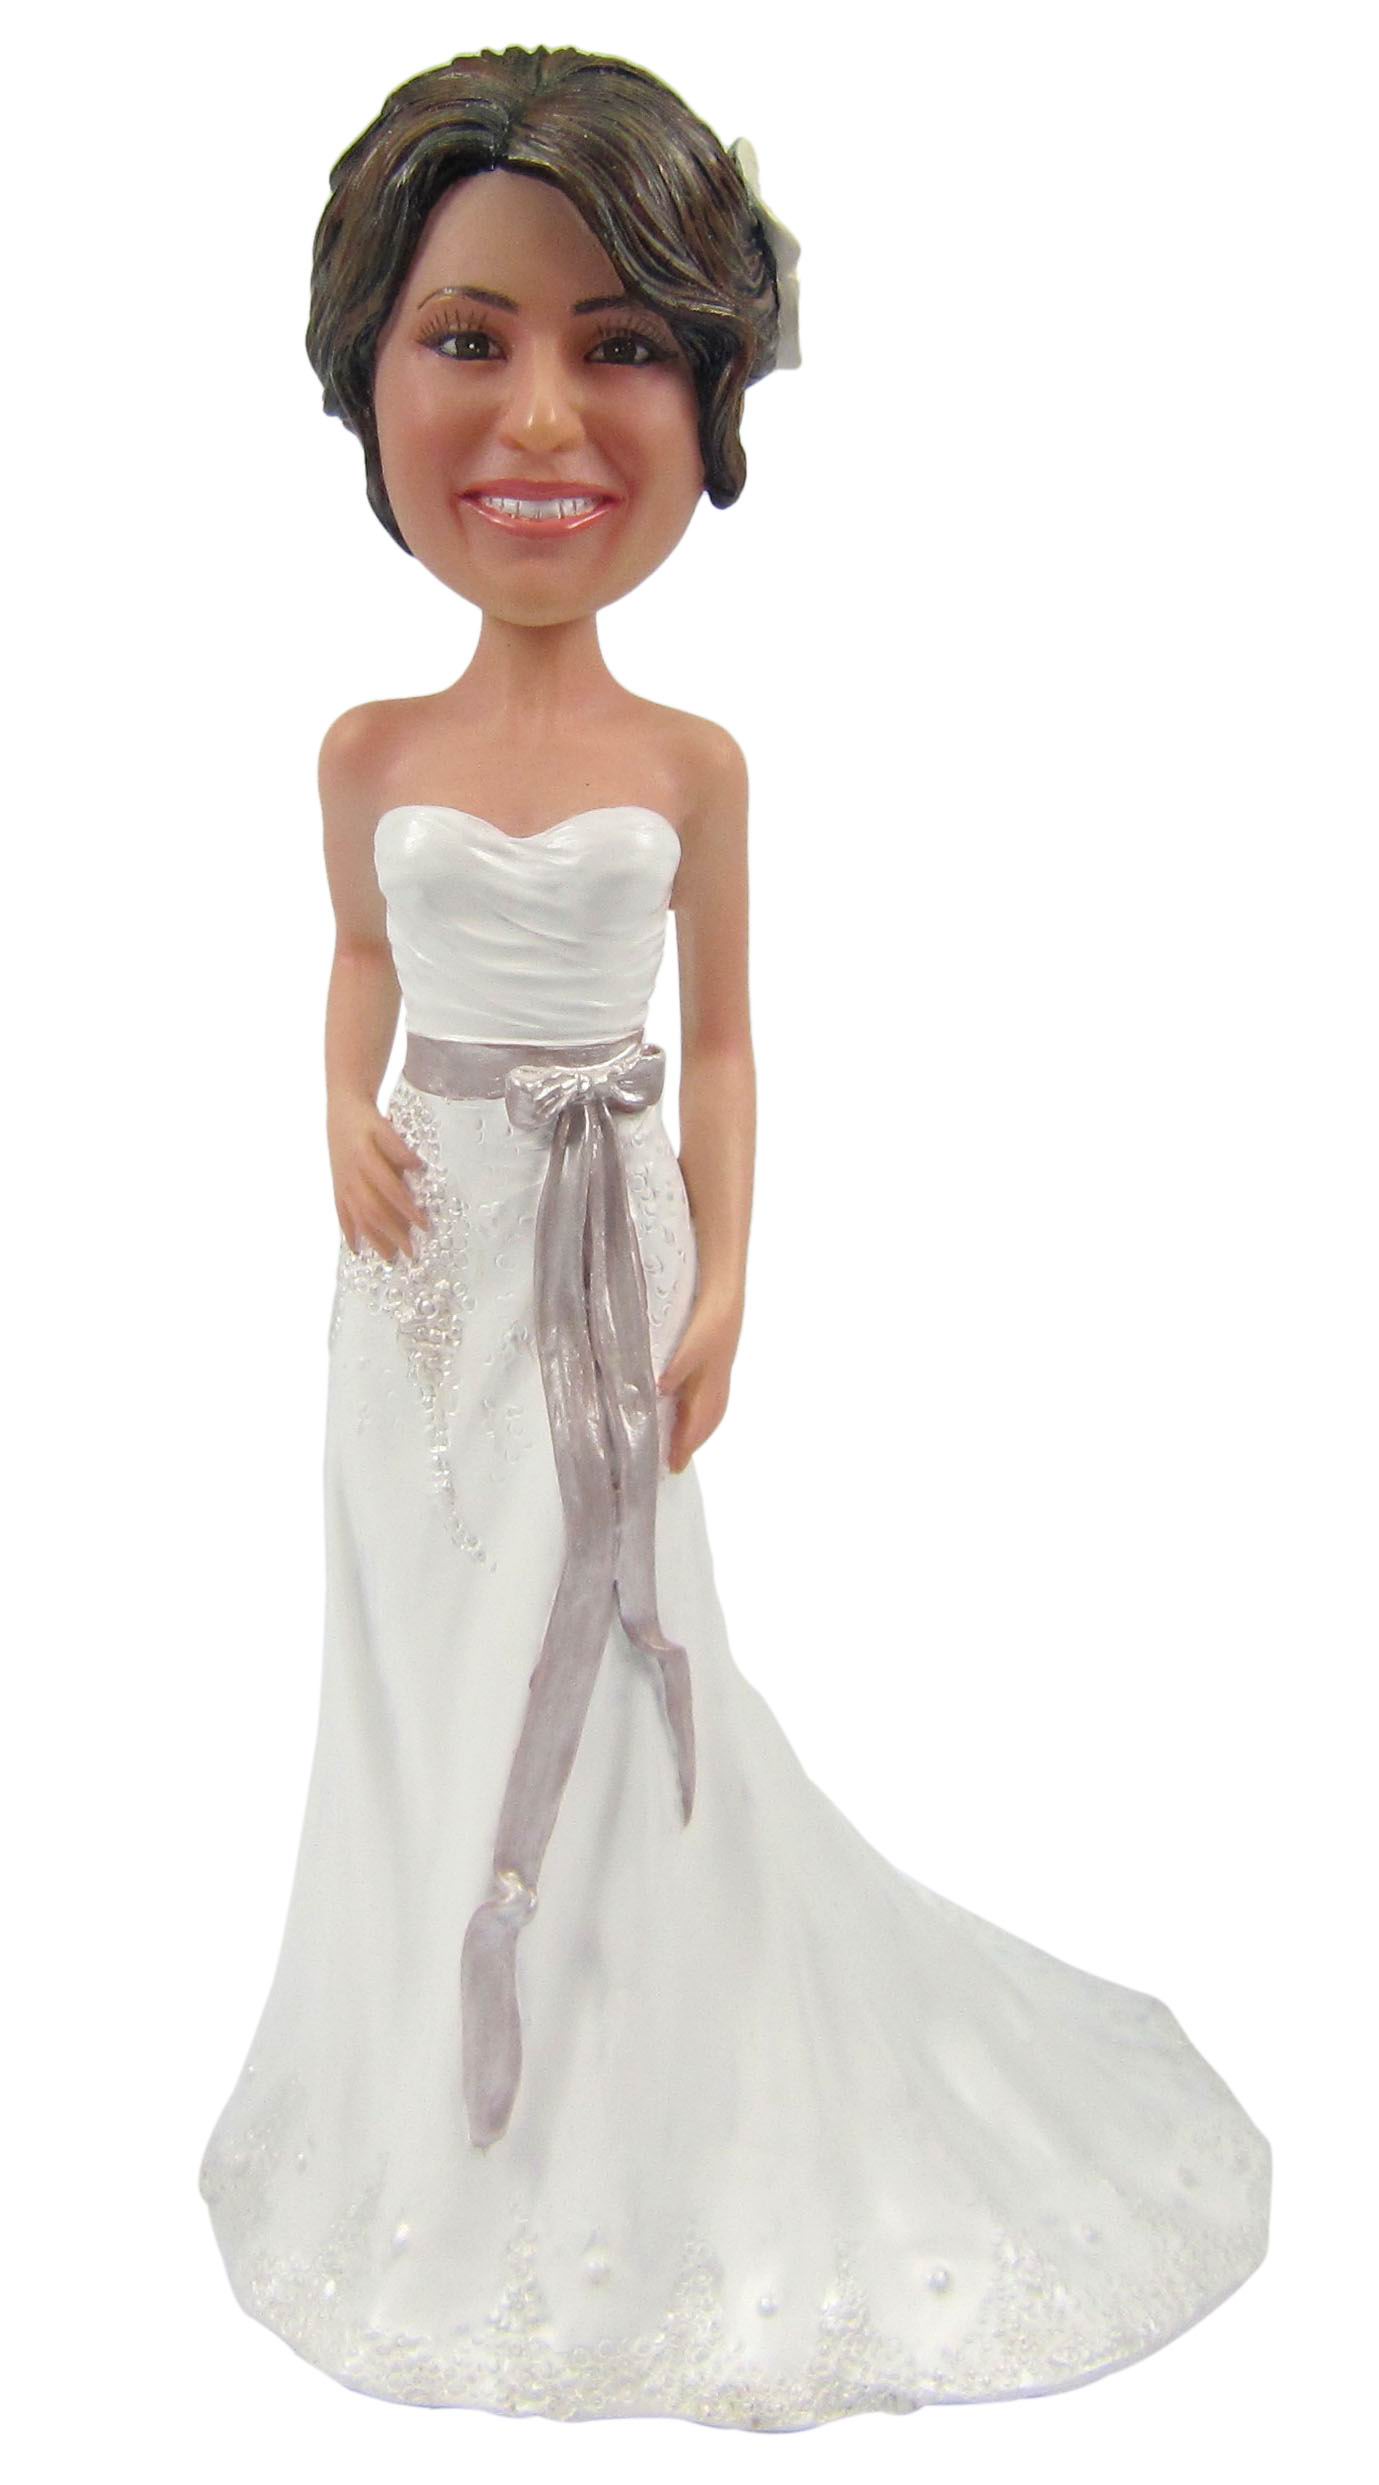 Bride in white wedding dress custom bobble head doll